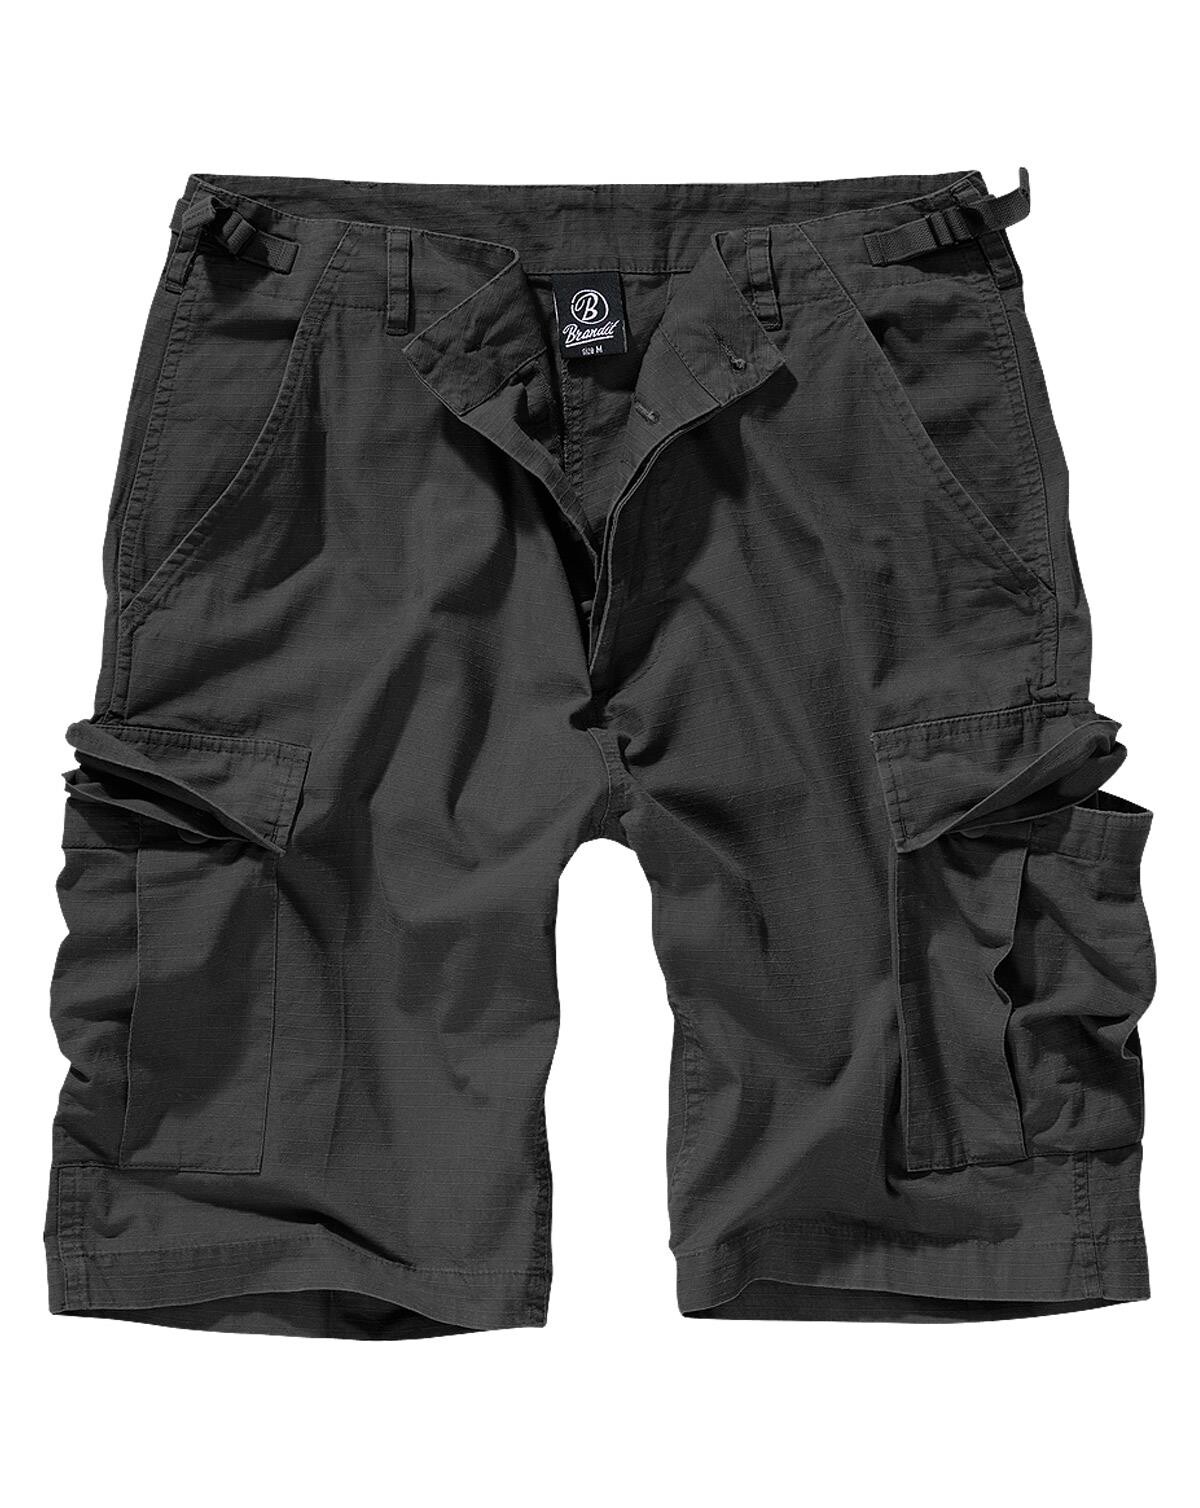 #2 - Brandit BDU Ripstop Shorts (Sort, XL)